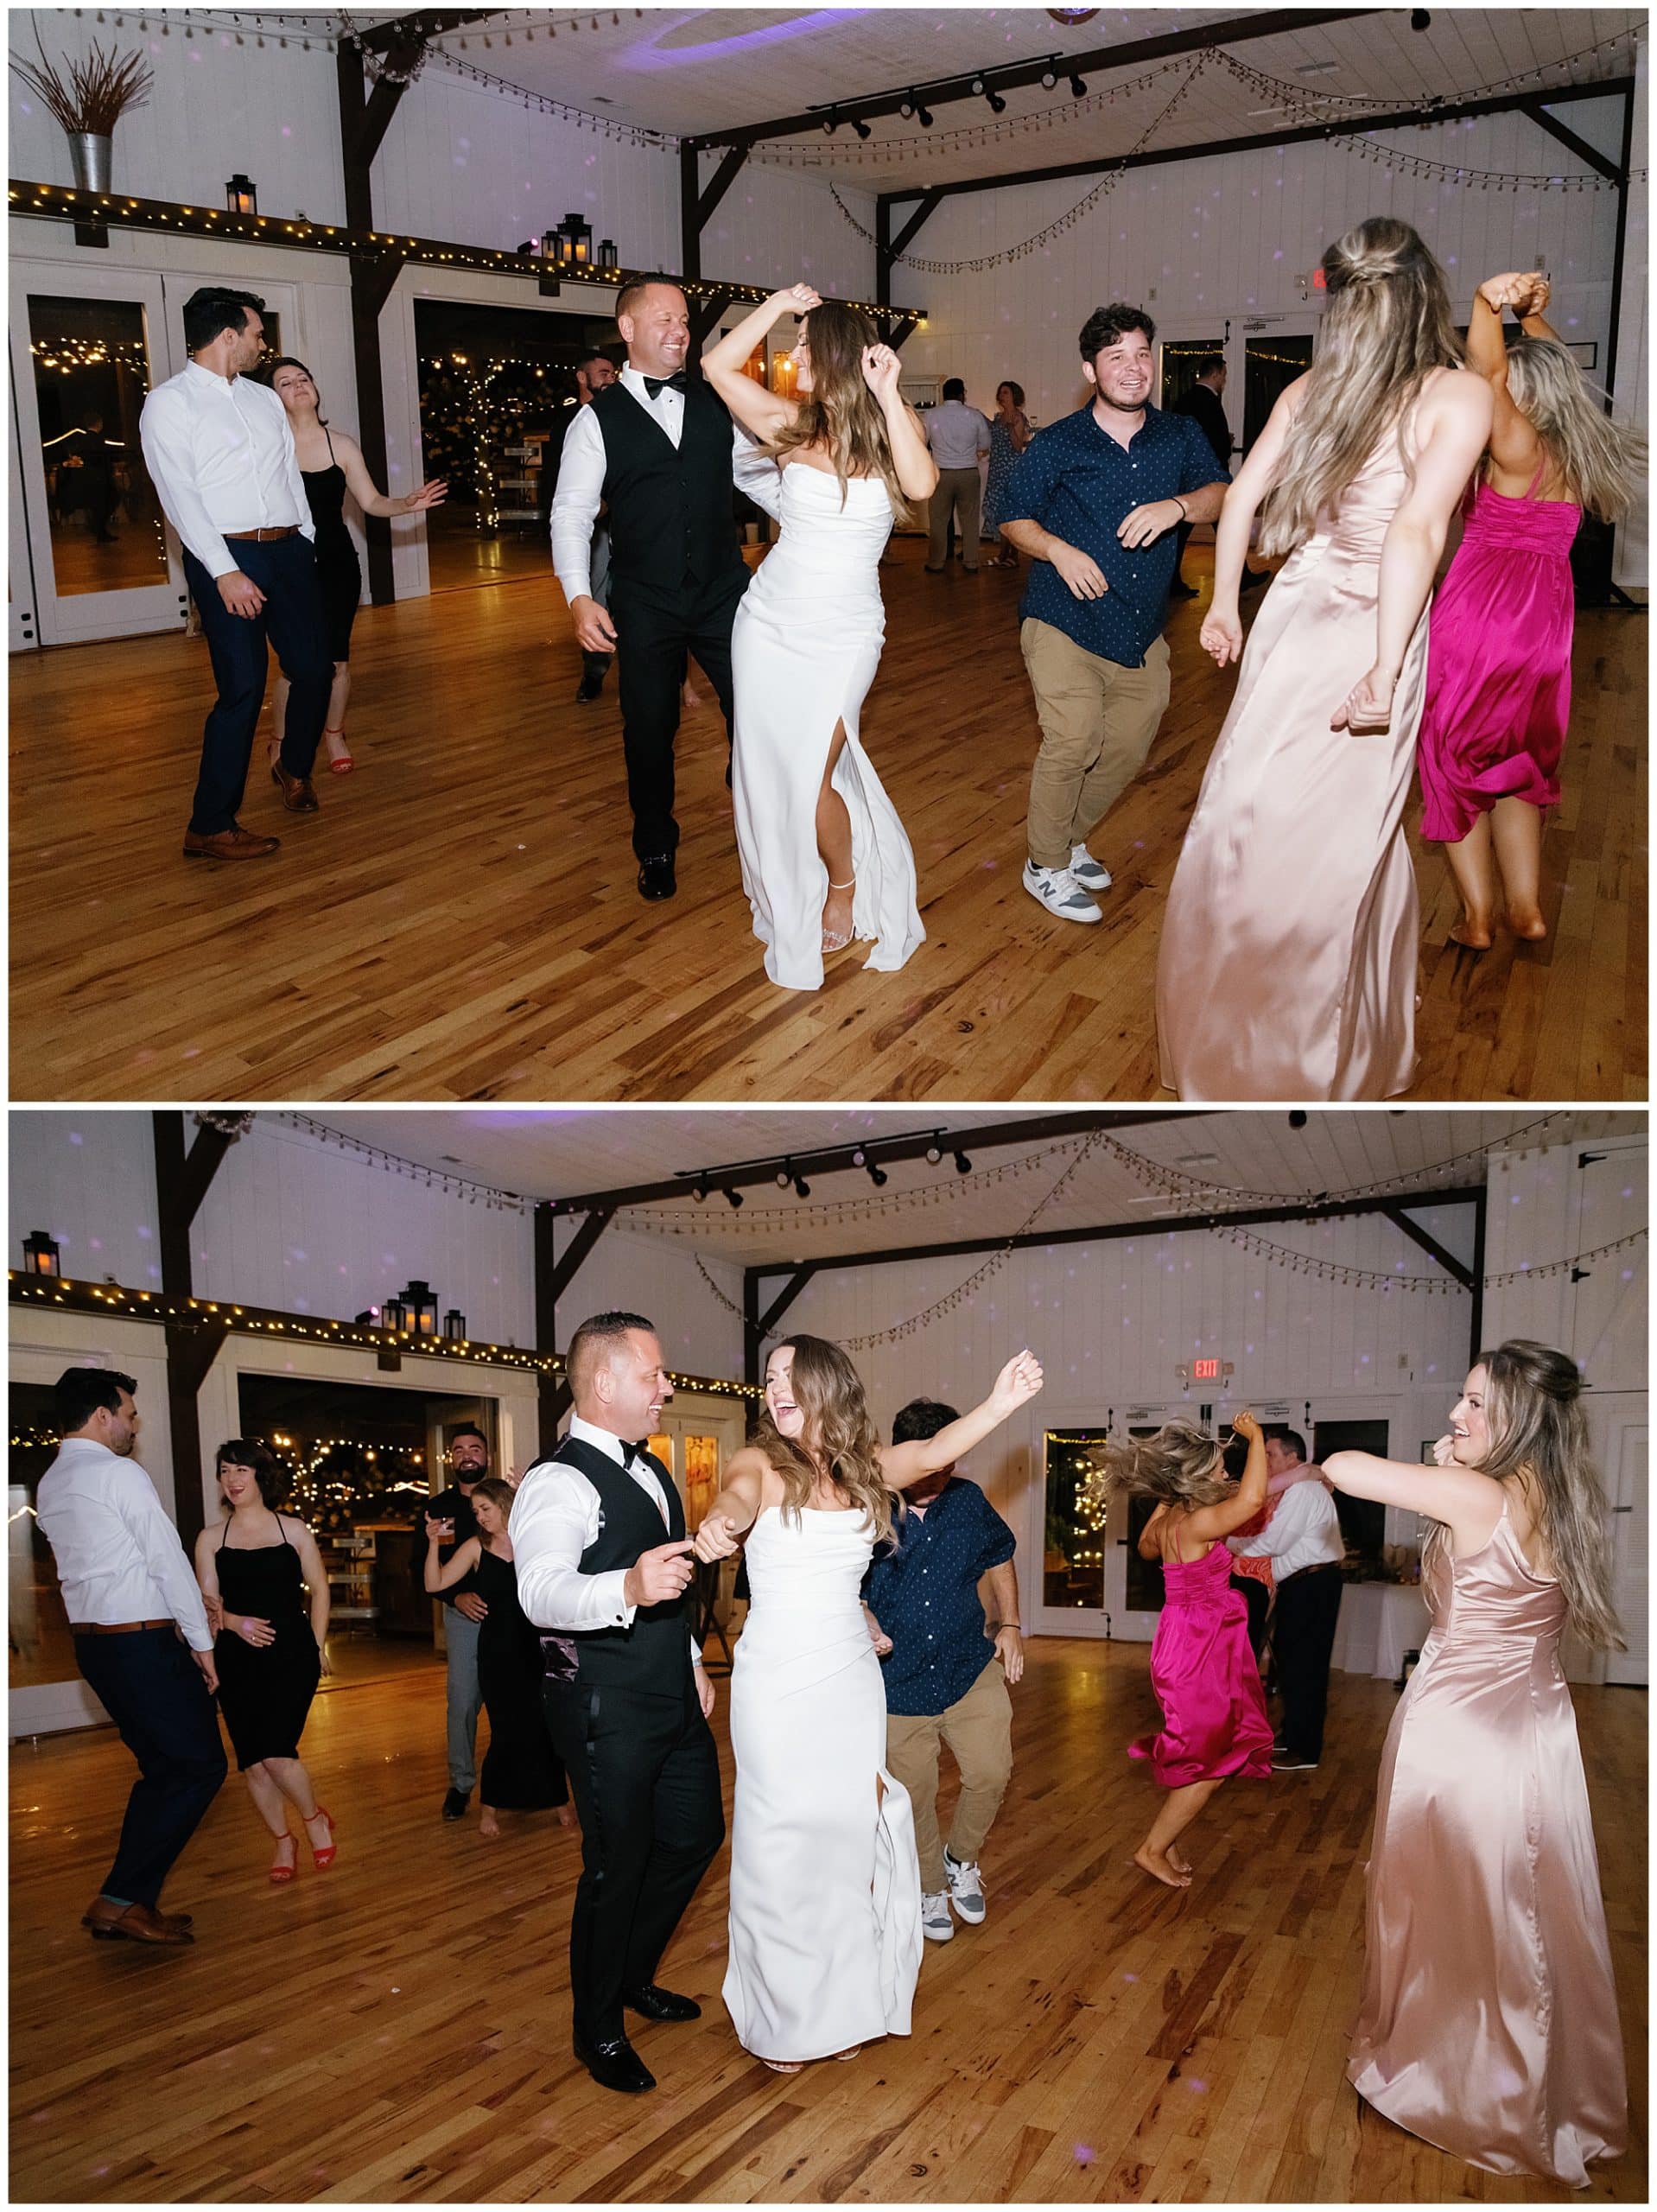 Bride and groom have fun on the dance floor at the farm wedding vnue.  Photographer Kathy Beaver 